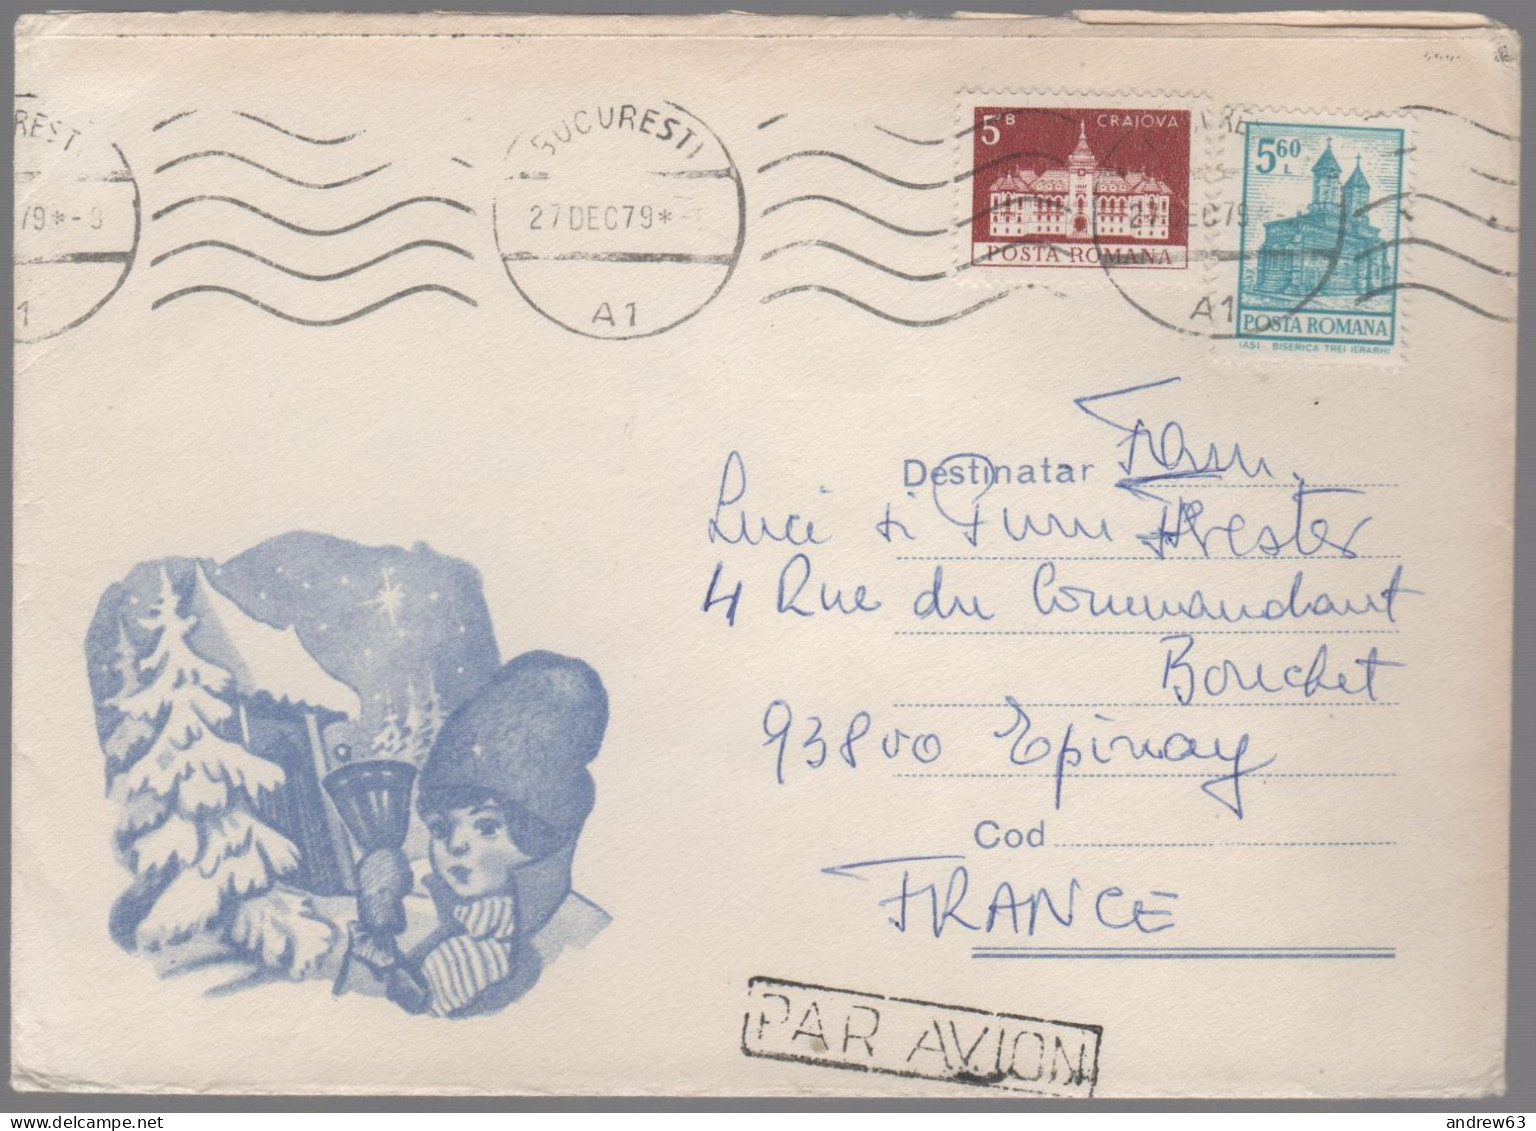 ROMANIA - Rumänien - Posta Romana - 1979 - 5 B + 5,60 L - Viaggiata Da Bucuresti Per Épinay-sur-Seine, France - Cartas & Documentos